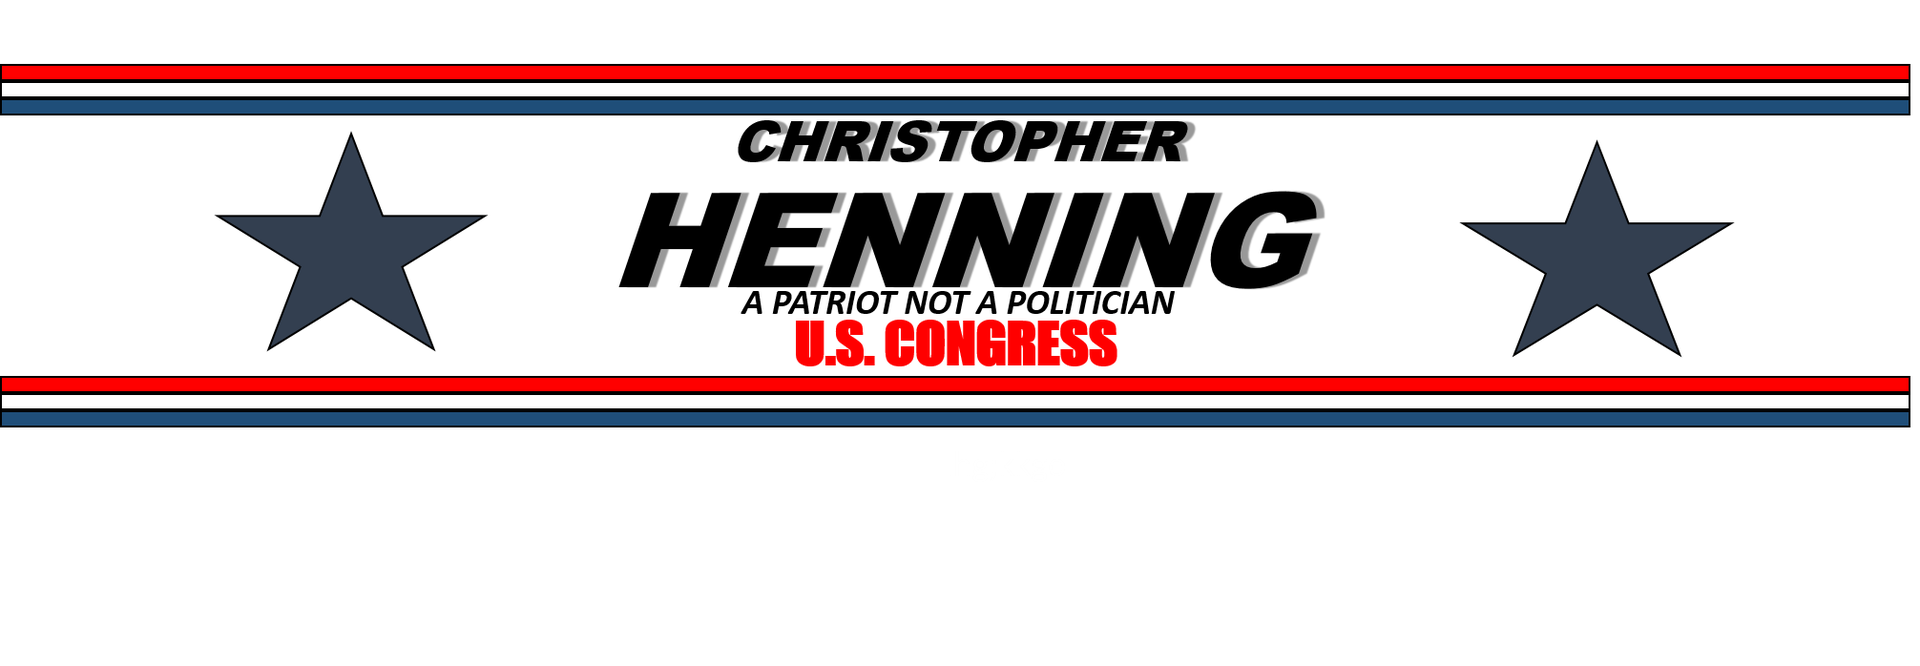 Henning logo